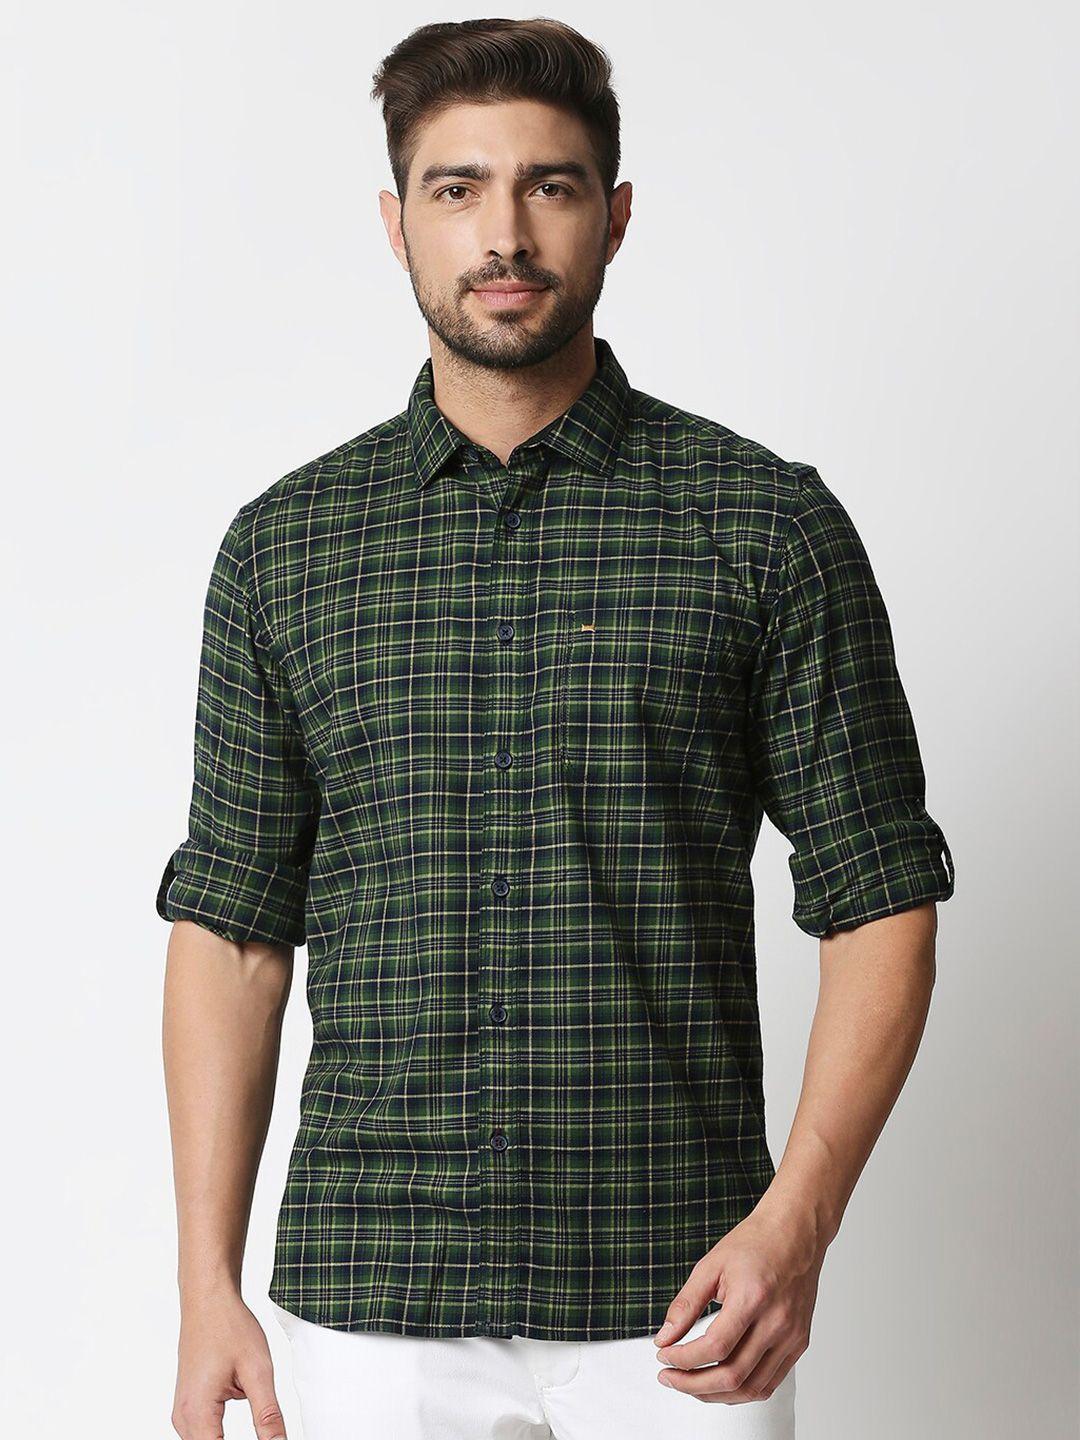 basics men olive green & white slim fit checked cotton casual shirt